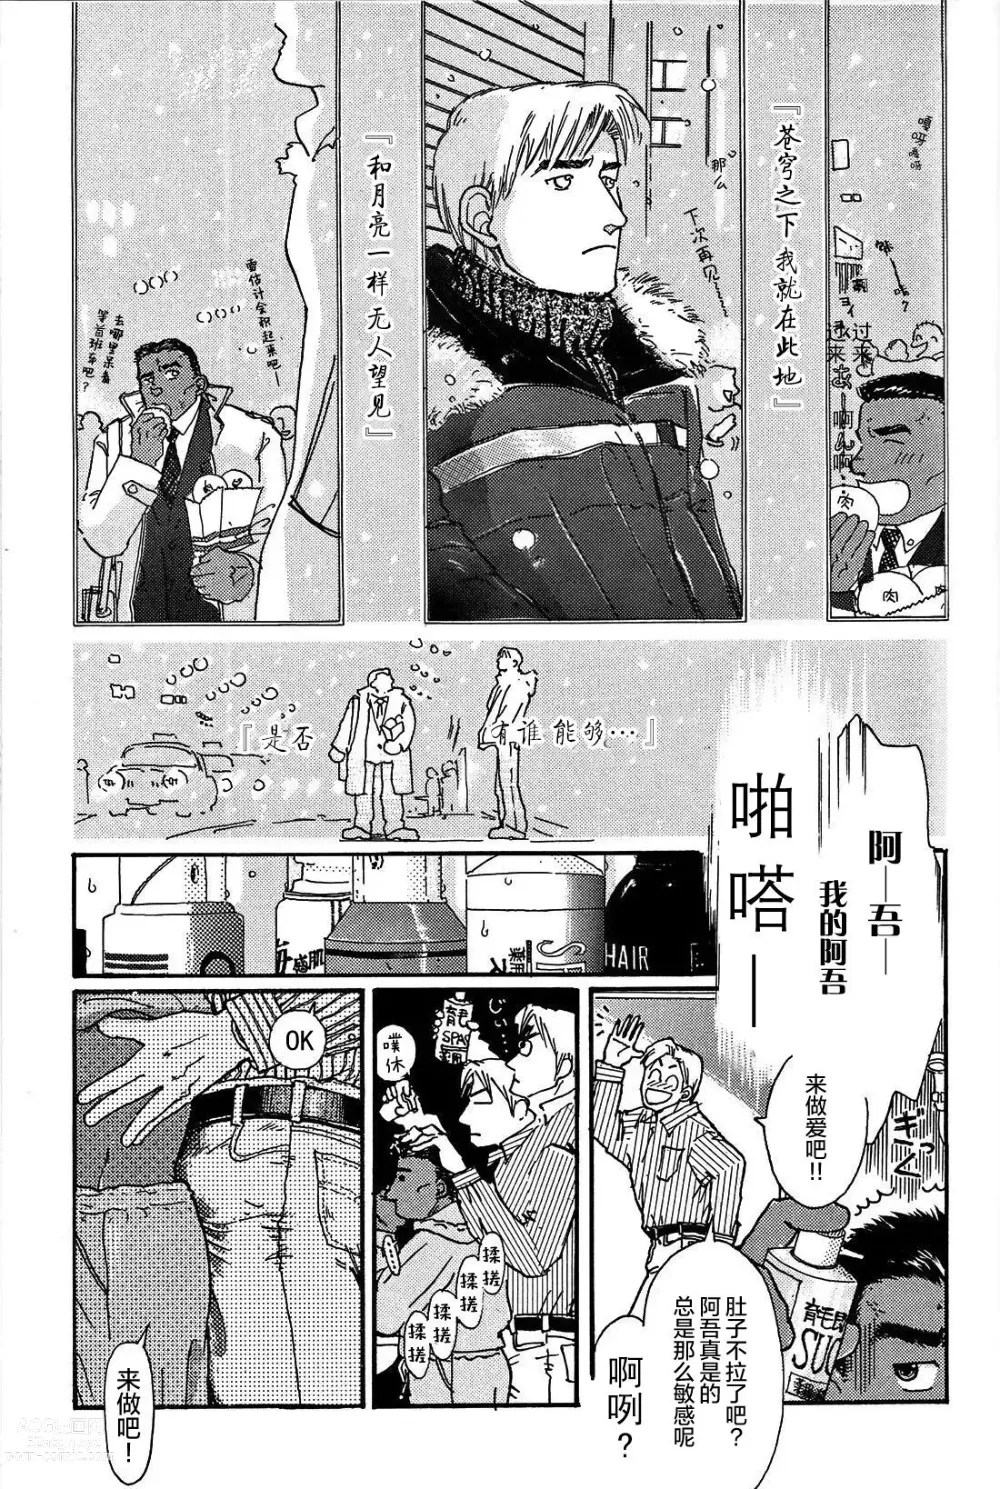 Page 5 of manga 纯情!! 第二章 「爱情的模样」